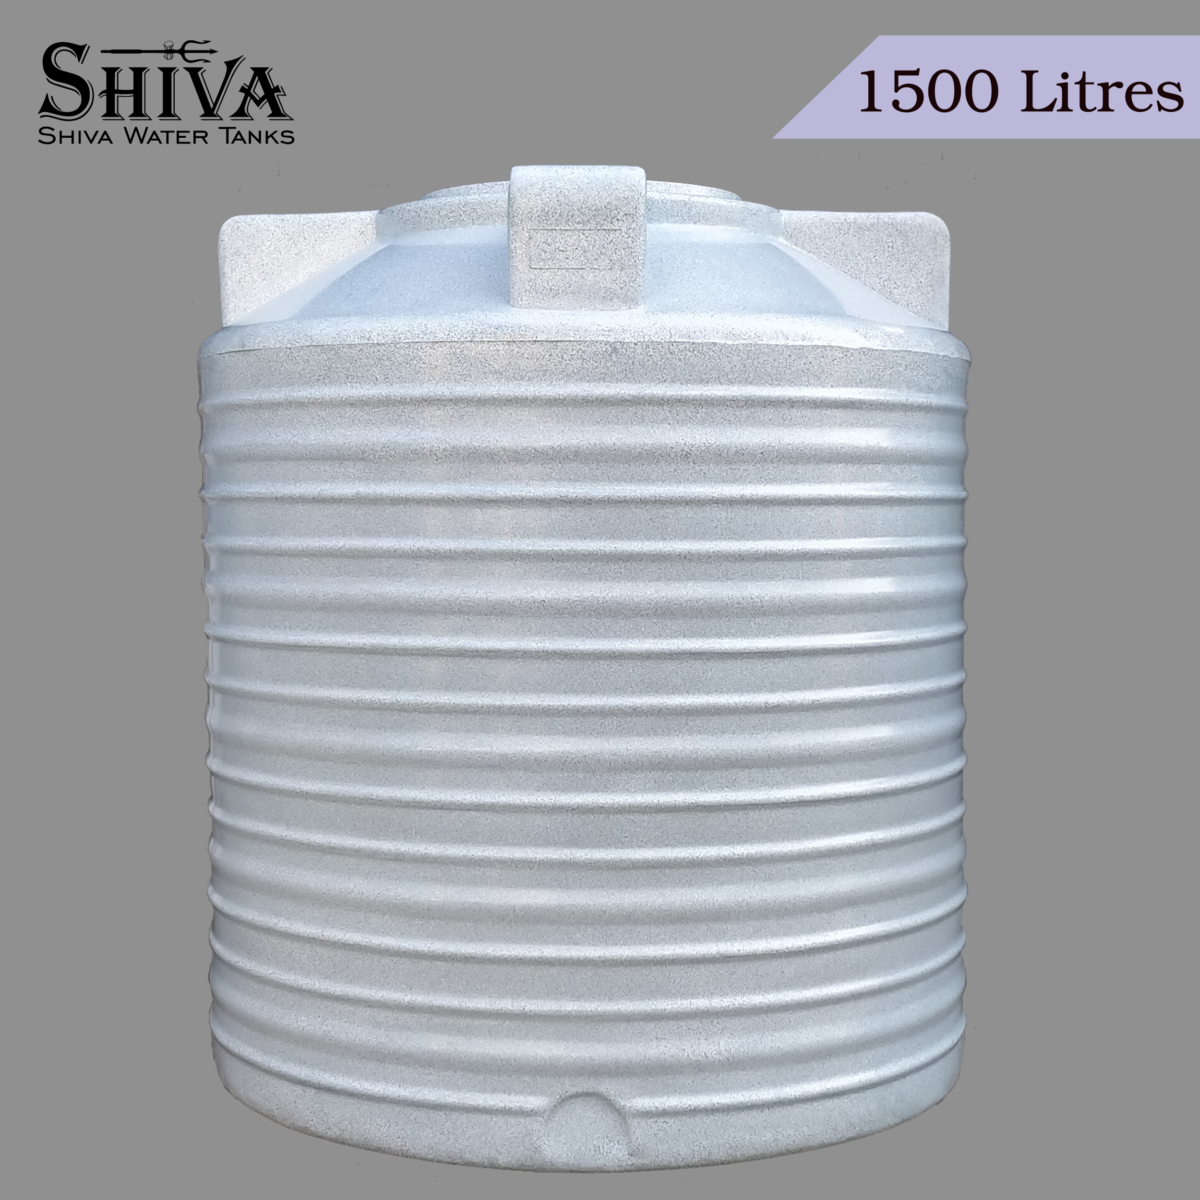 1500 Litres - SHIVA U-Form - 4 Layers